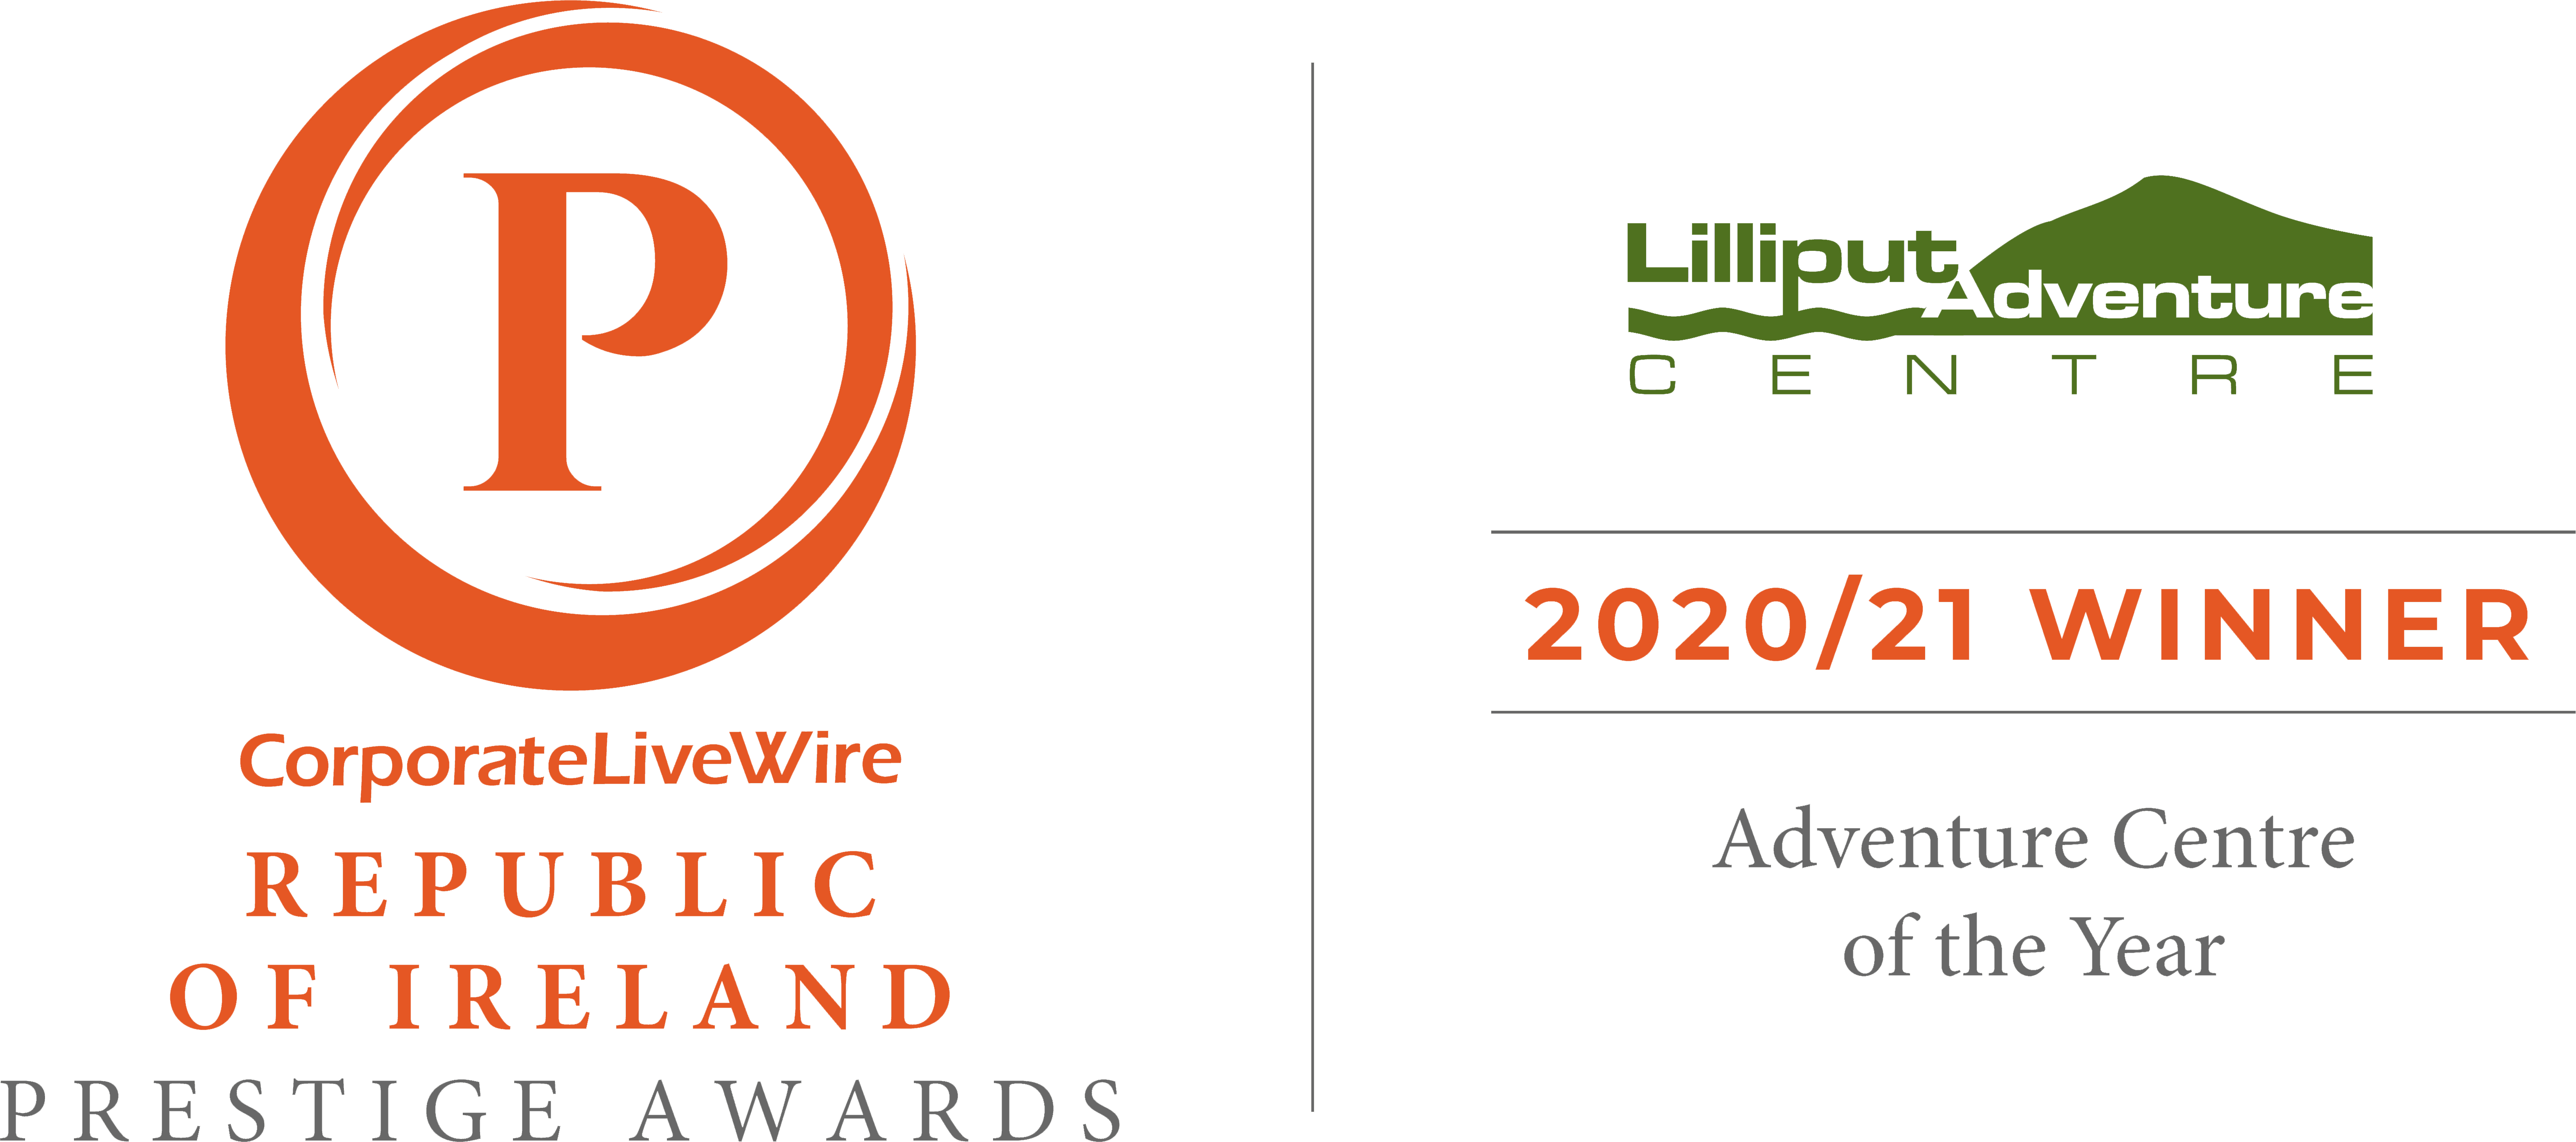 Republic of Ireland Prestige Awards Adventure Centre of the 2020/21